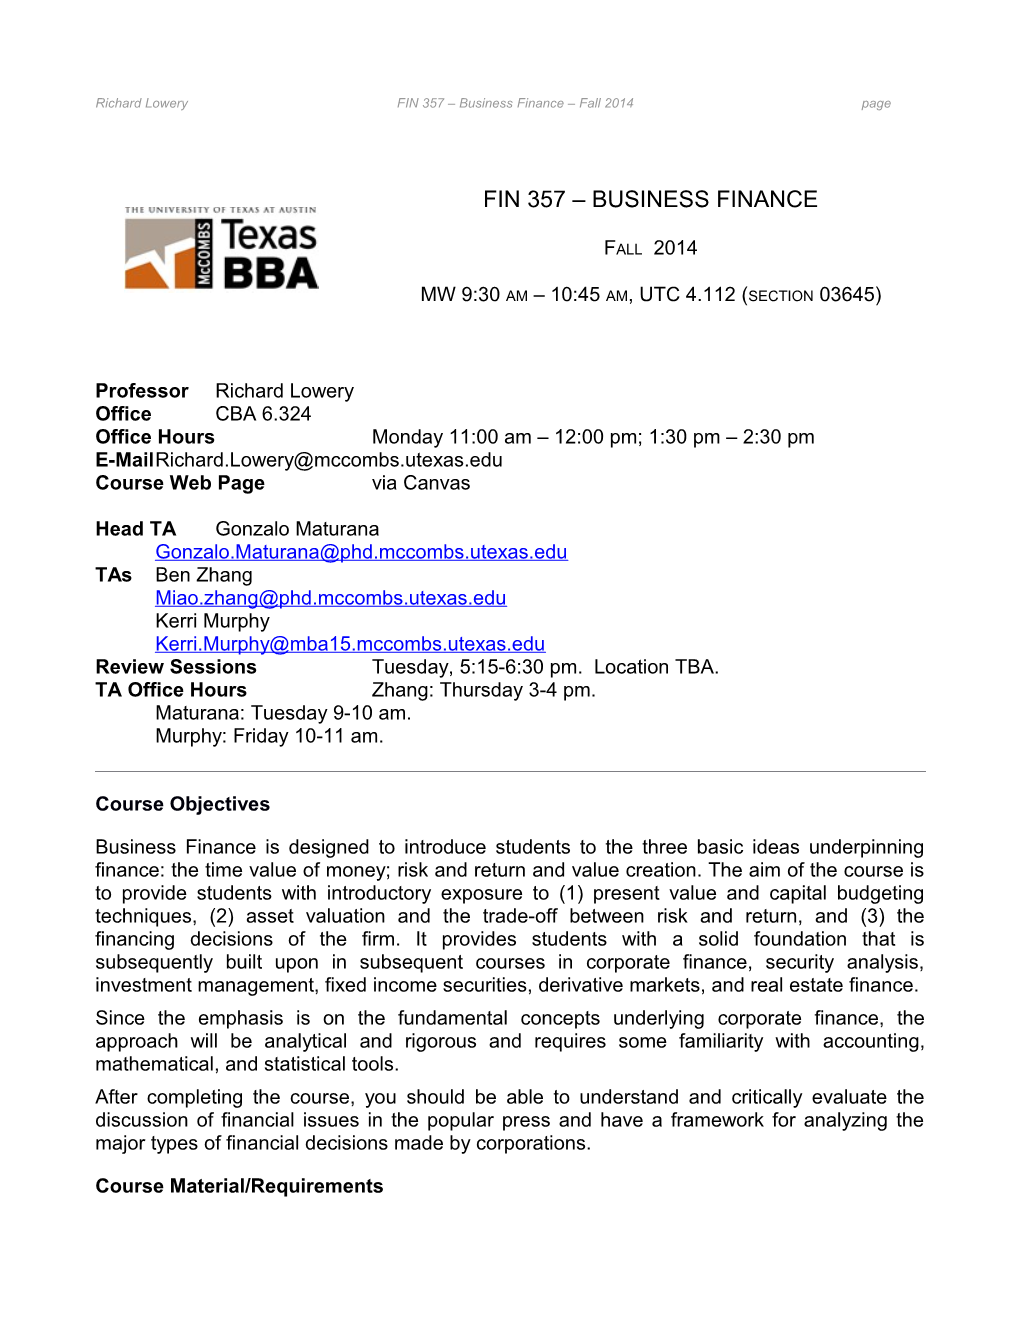 FIN 357 - Business Finance - R Lowery